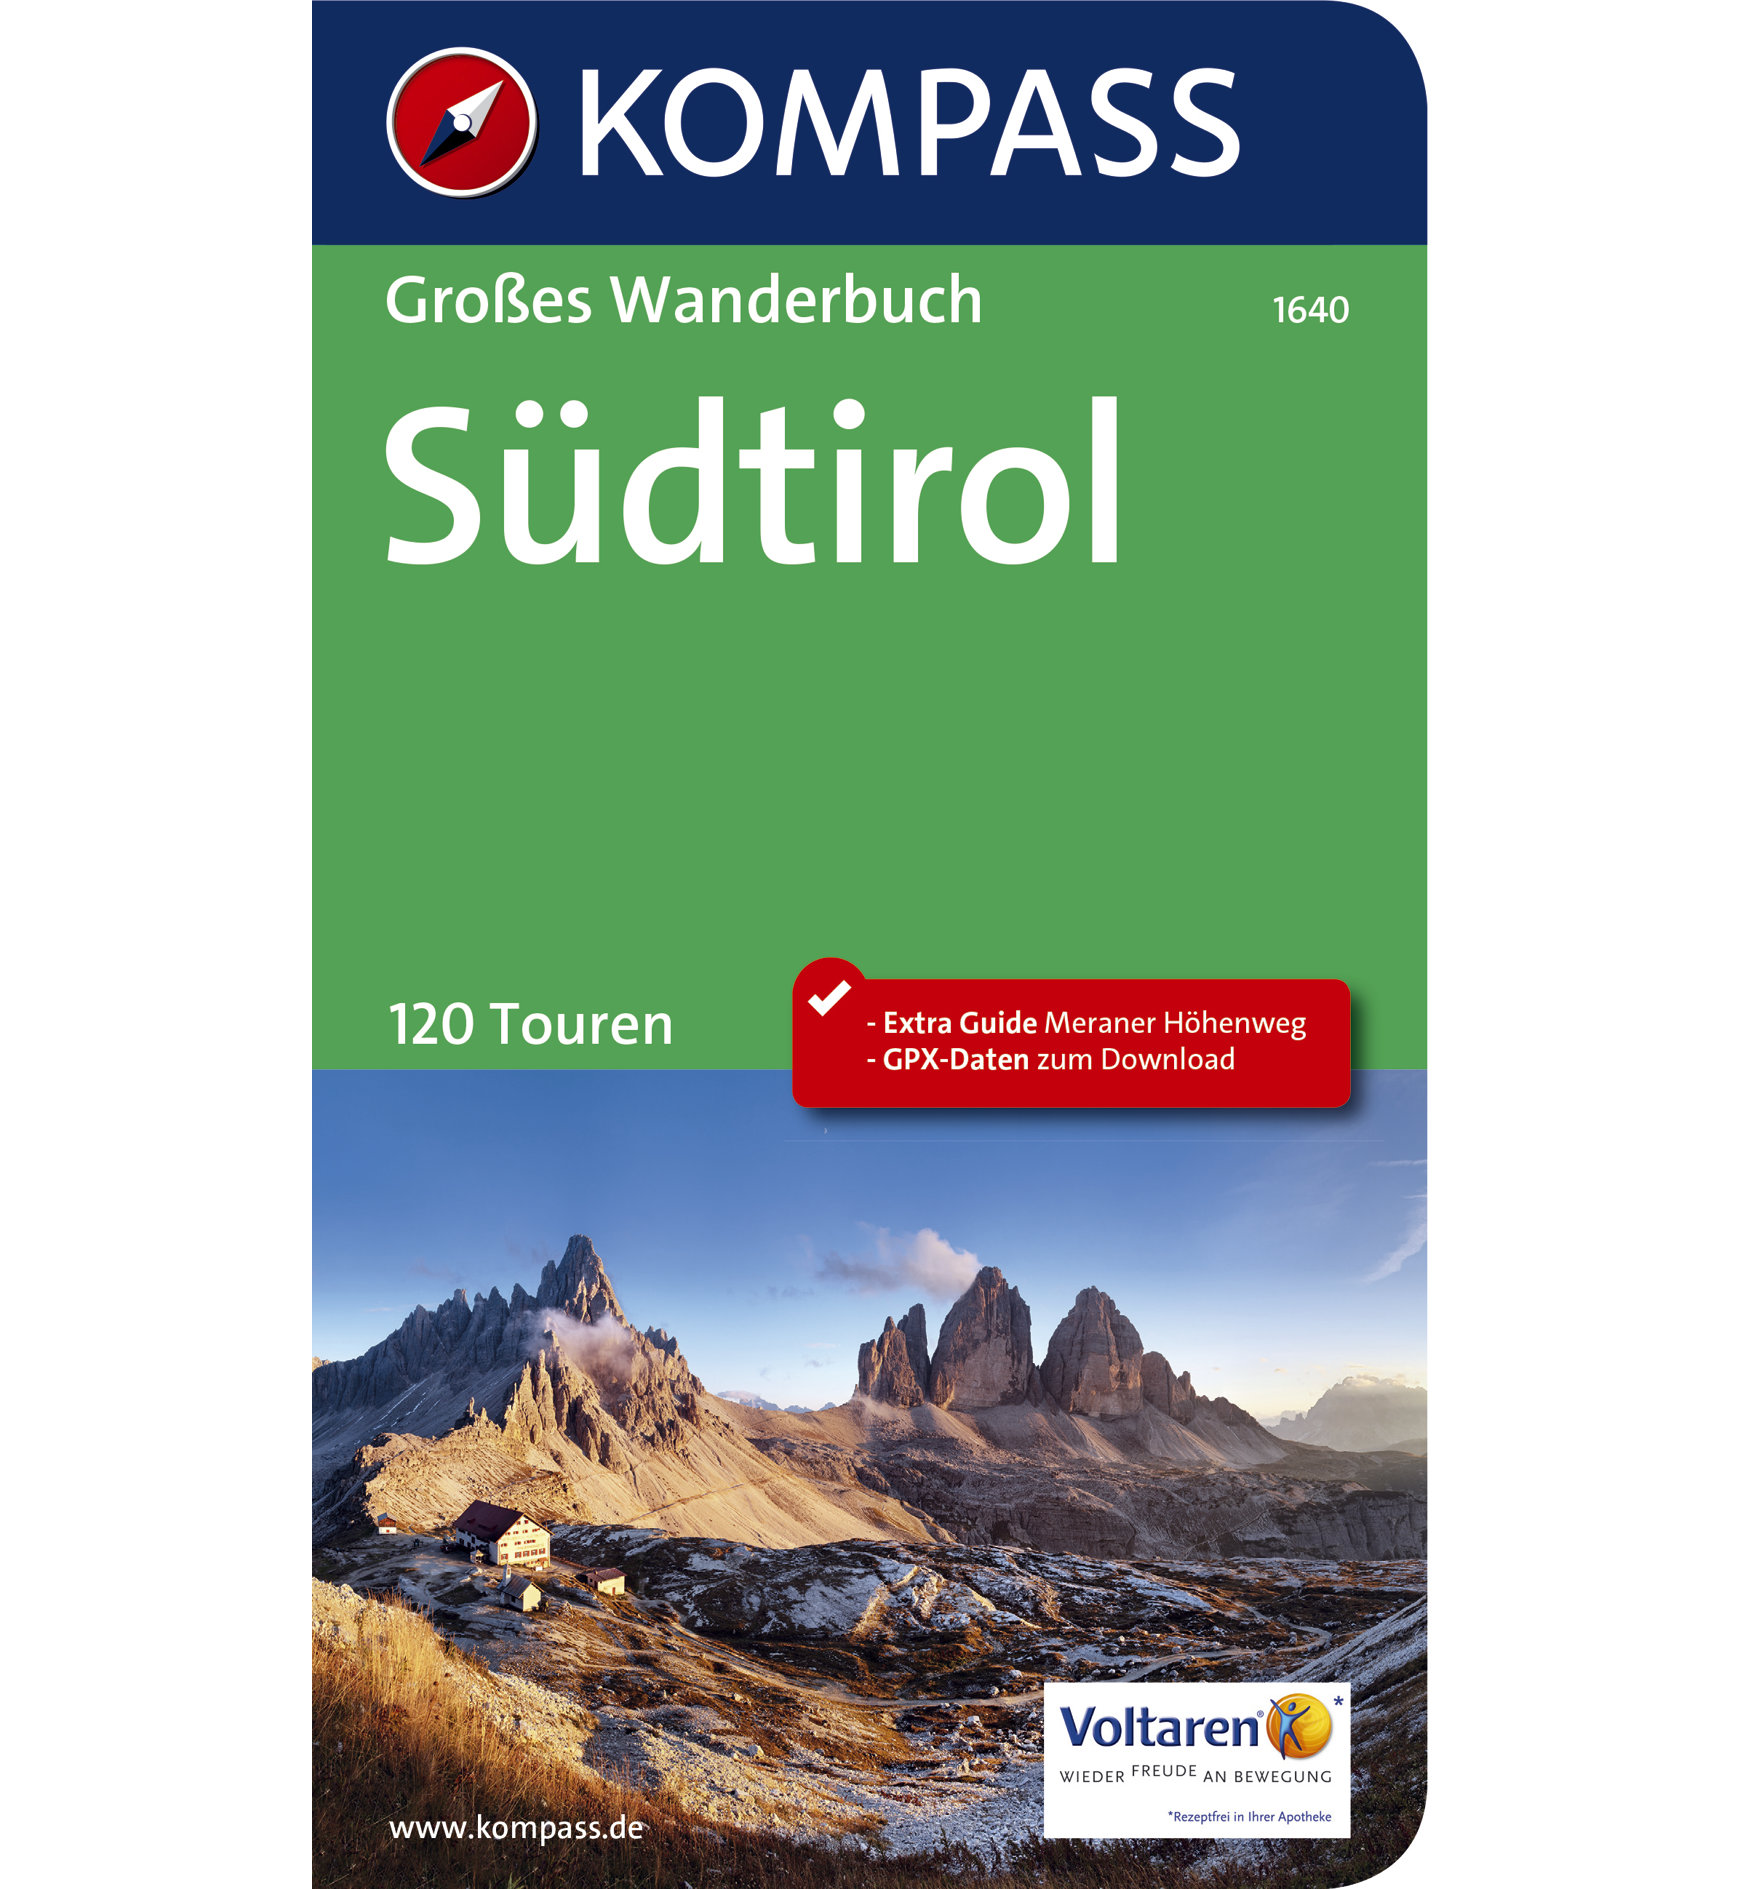 Kompass Karte Nr. 1640 Südtirol - 120 Touren | Sportler.com